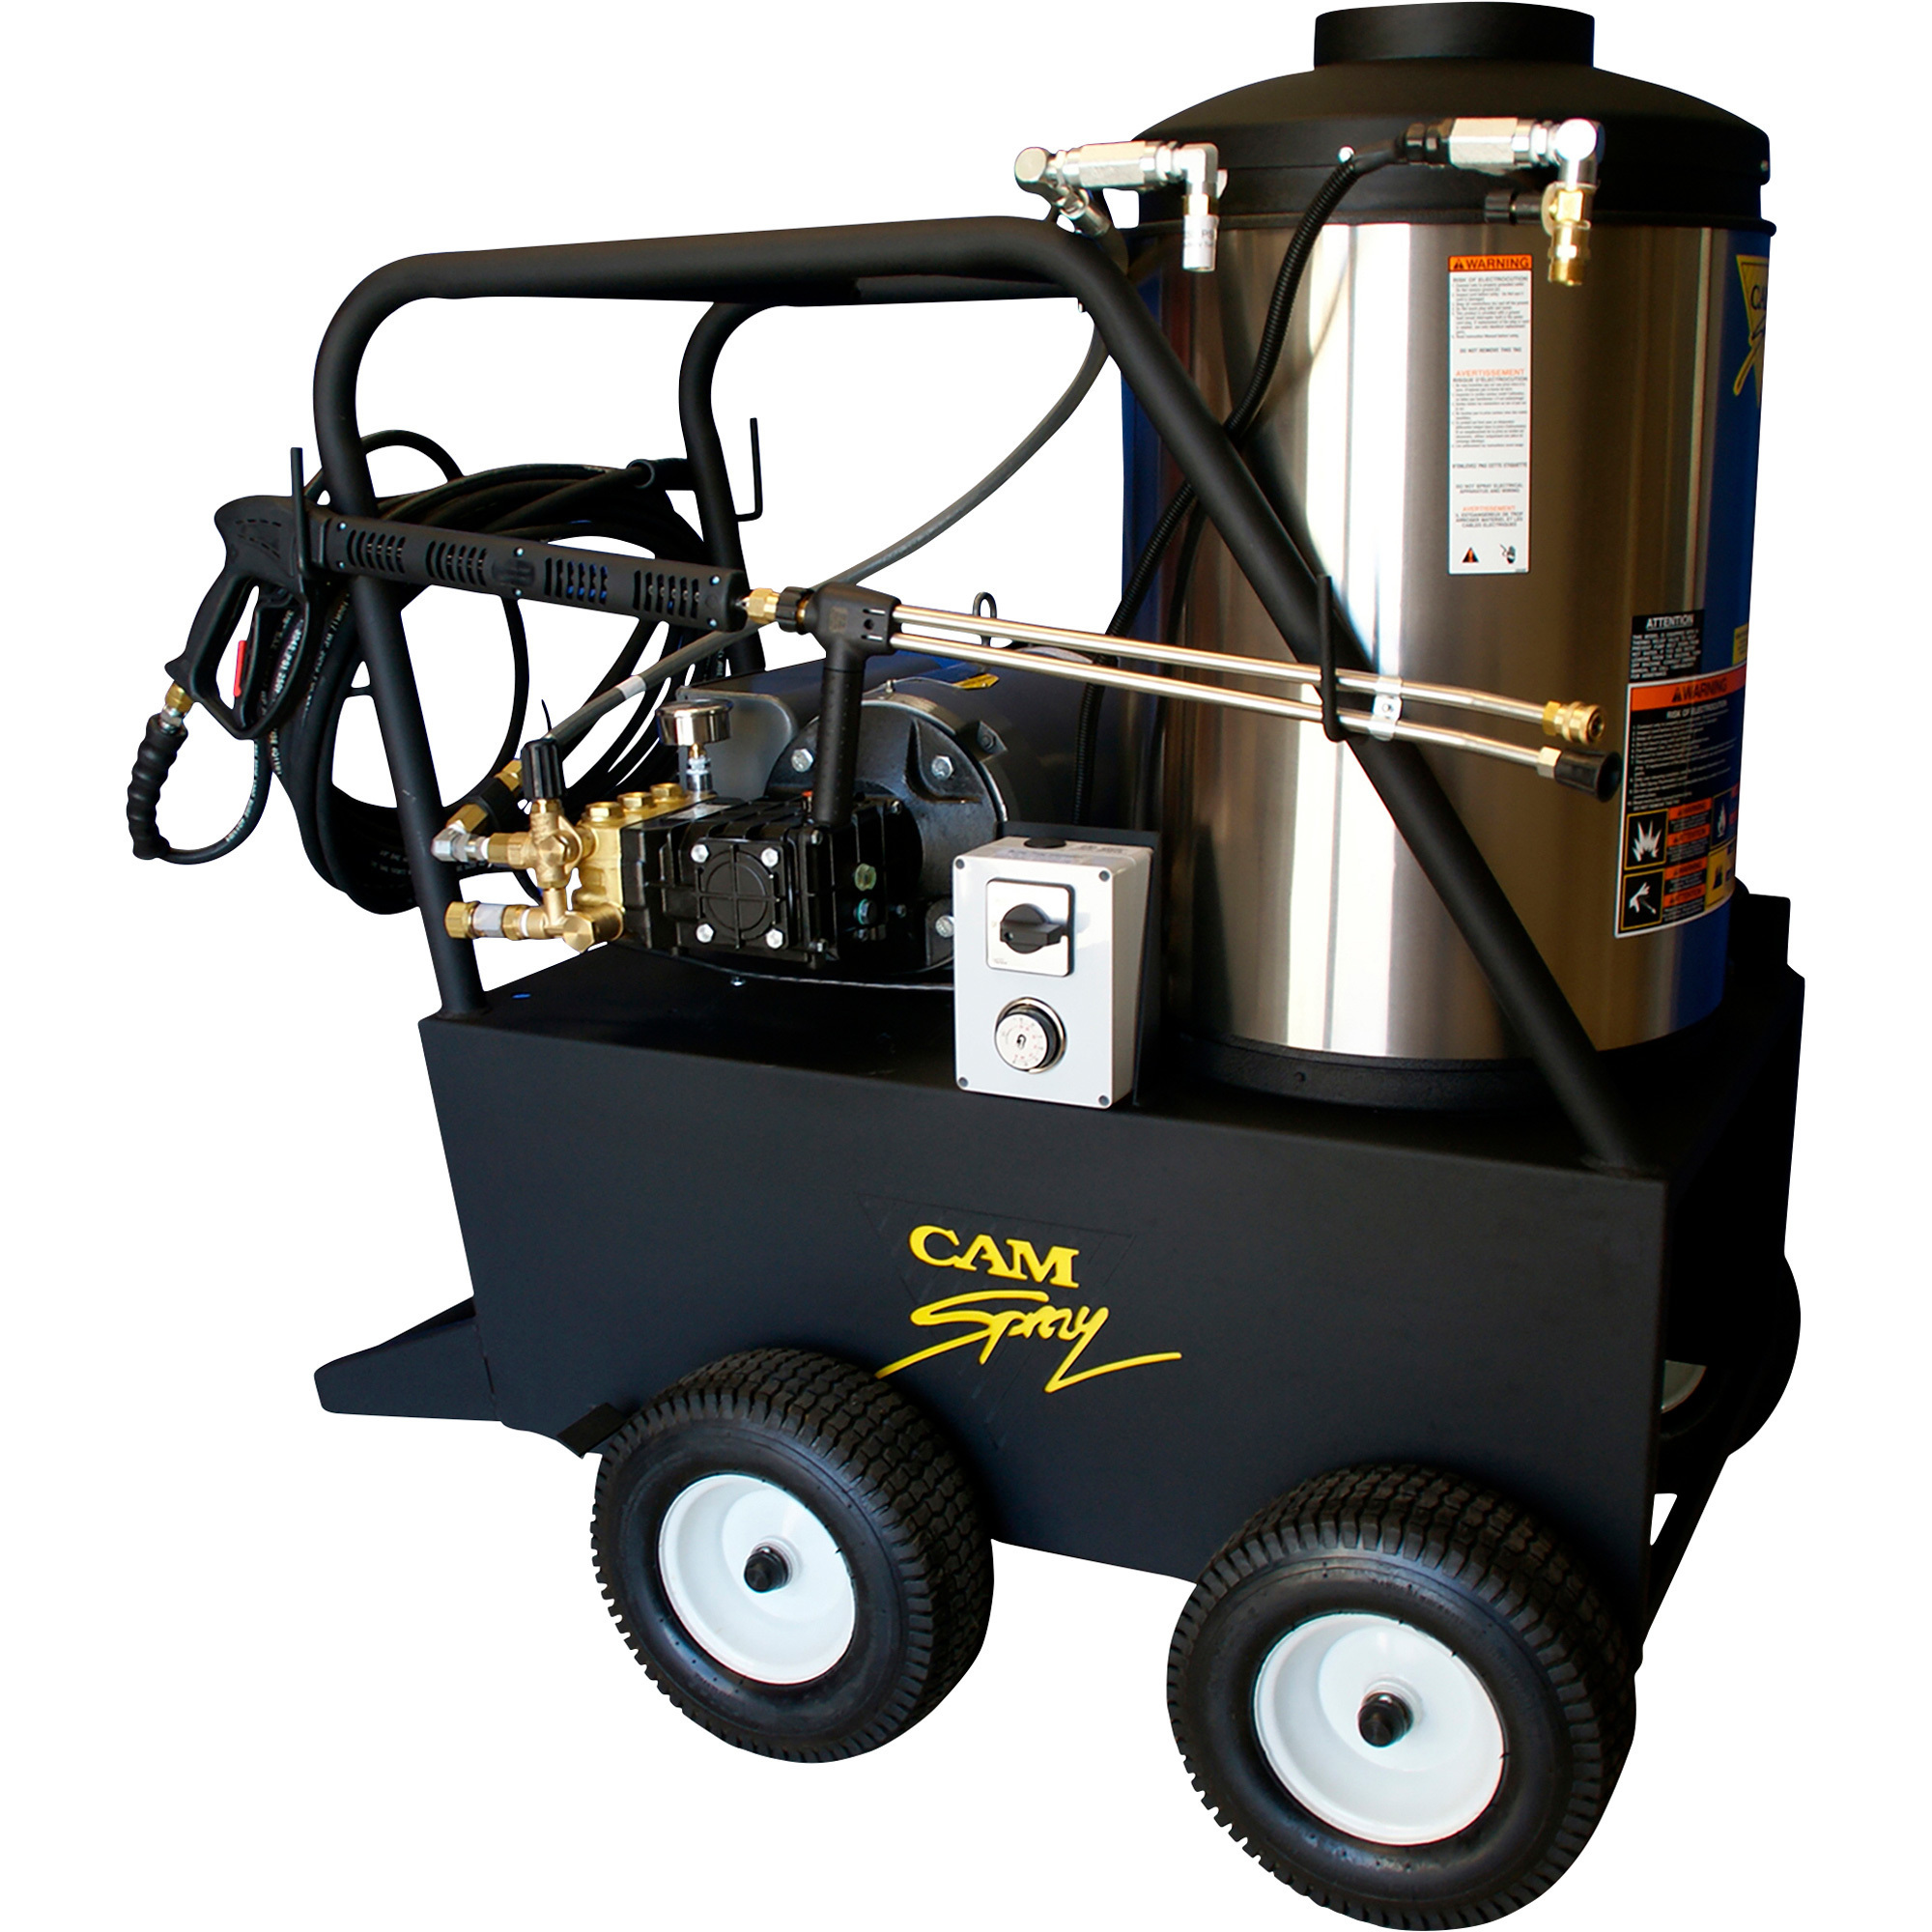 Cam Spray Electric Hot Water Pressure Washer â 2000 PSI, 4.0 GPM, 230 Volts, Model 2000QE